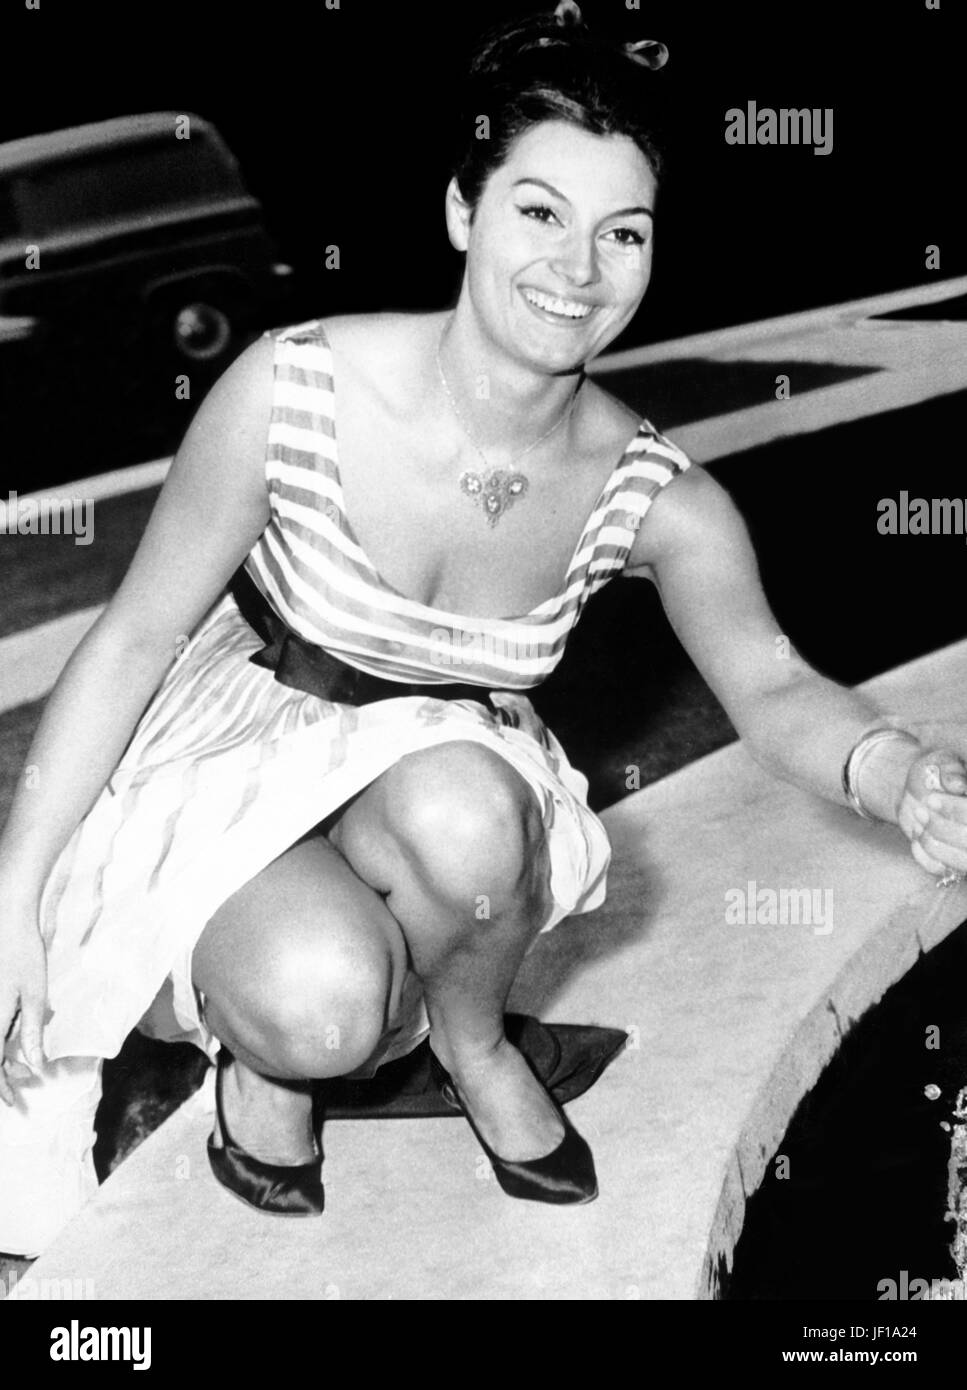 rosanna schiaffino, 1962 Stock Photo